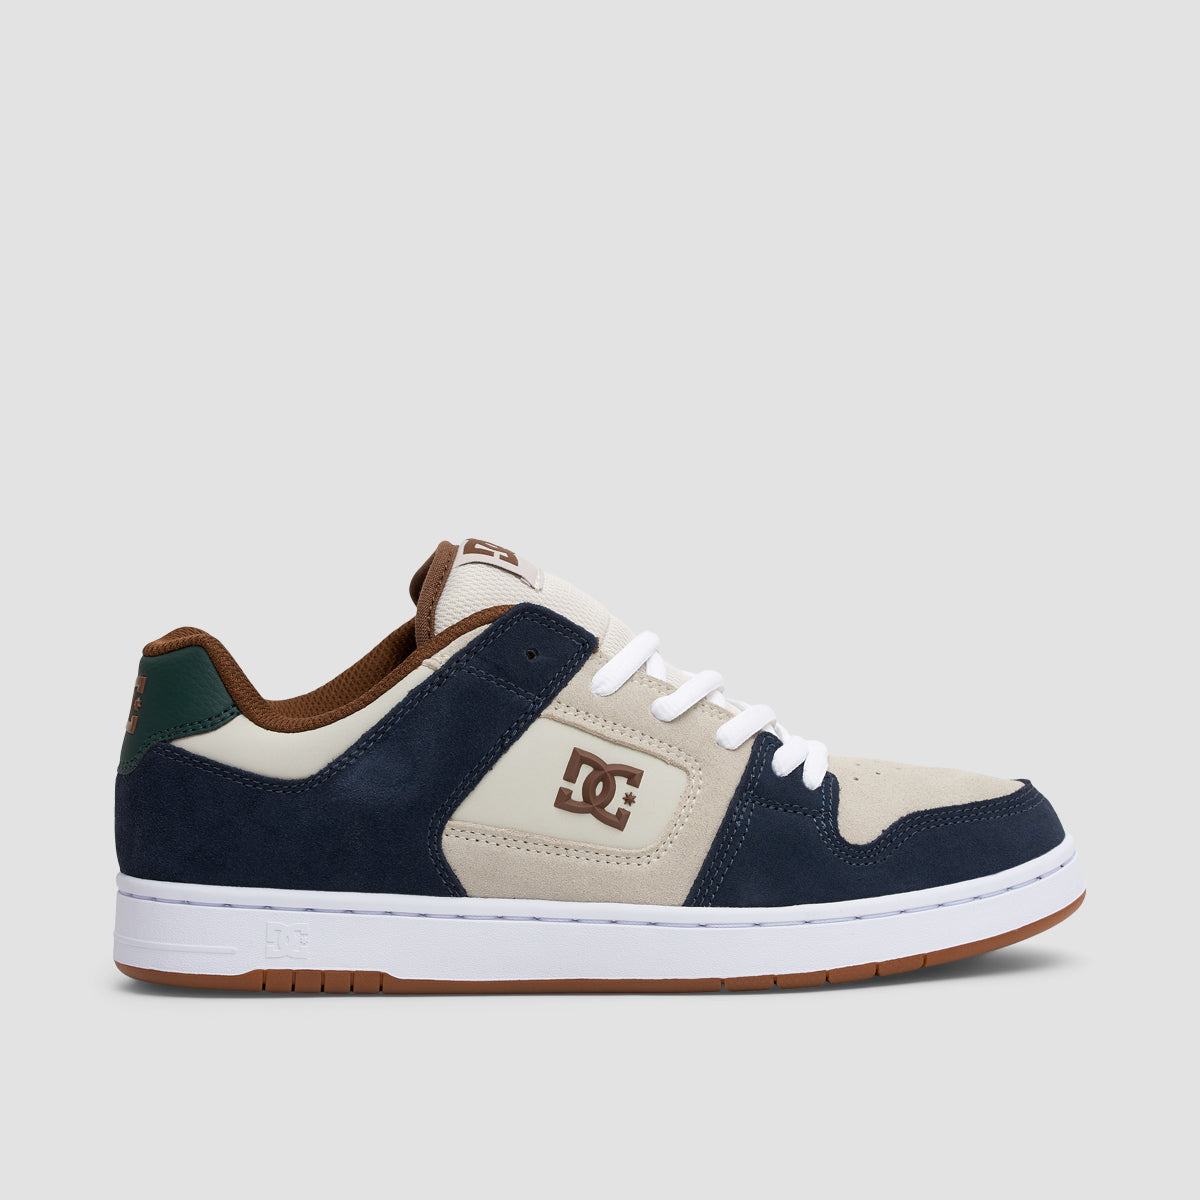 DC Manteca 4 S Shoes - Navy/Khaki